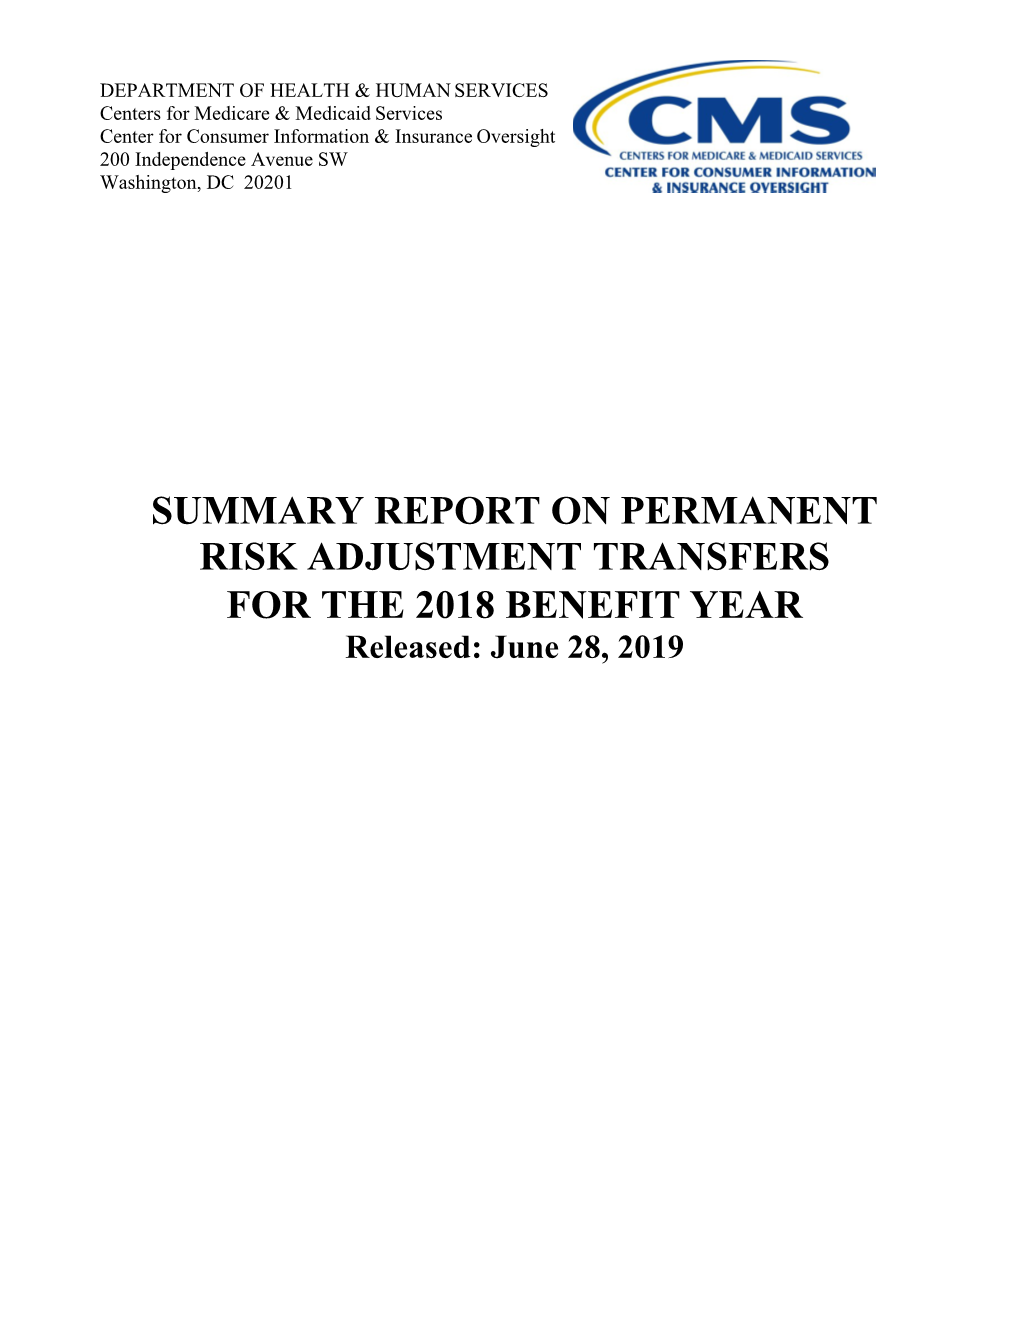 Benefit Year 2018 Risk Adjustment Summary Report